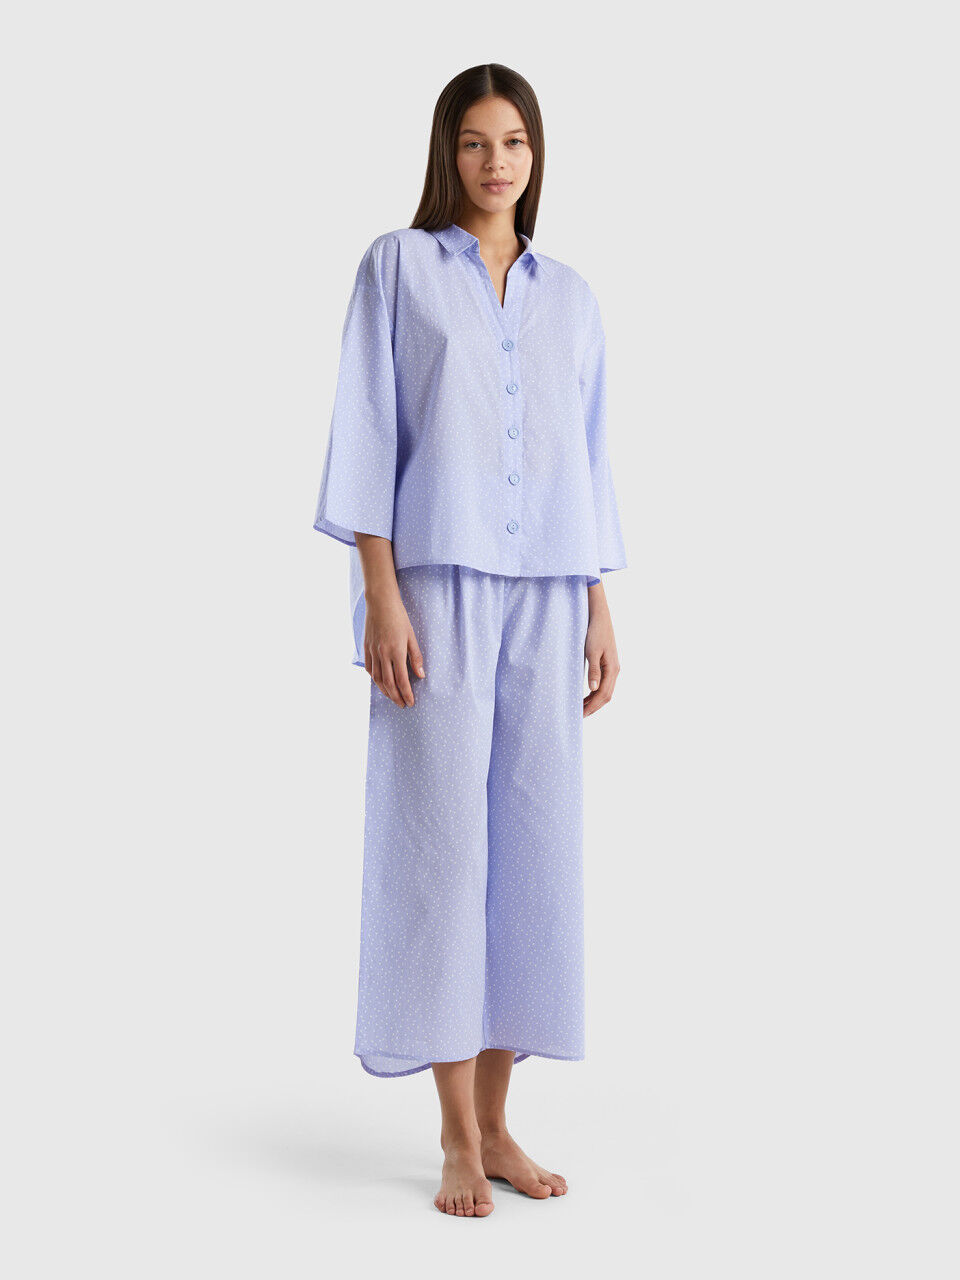 Polka dot pyjamas in cotton